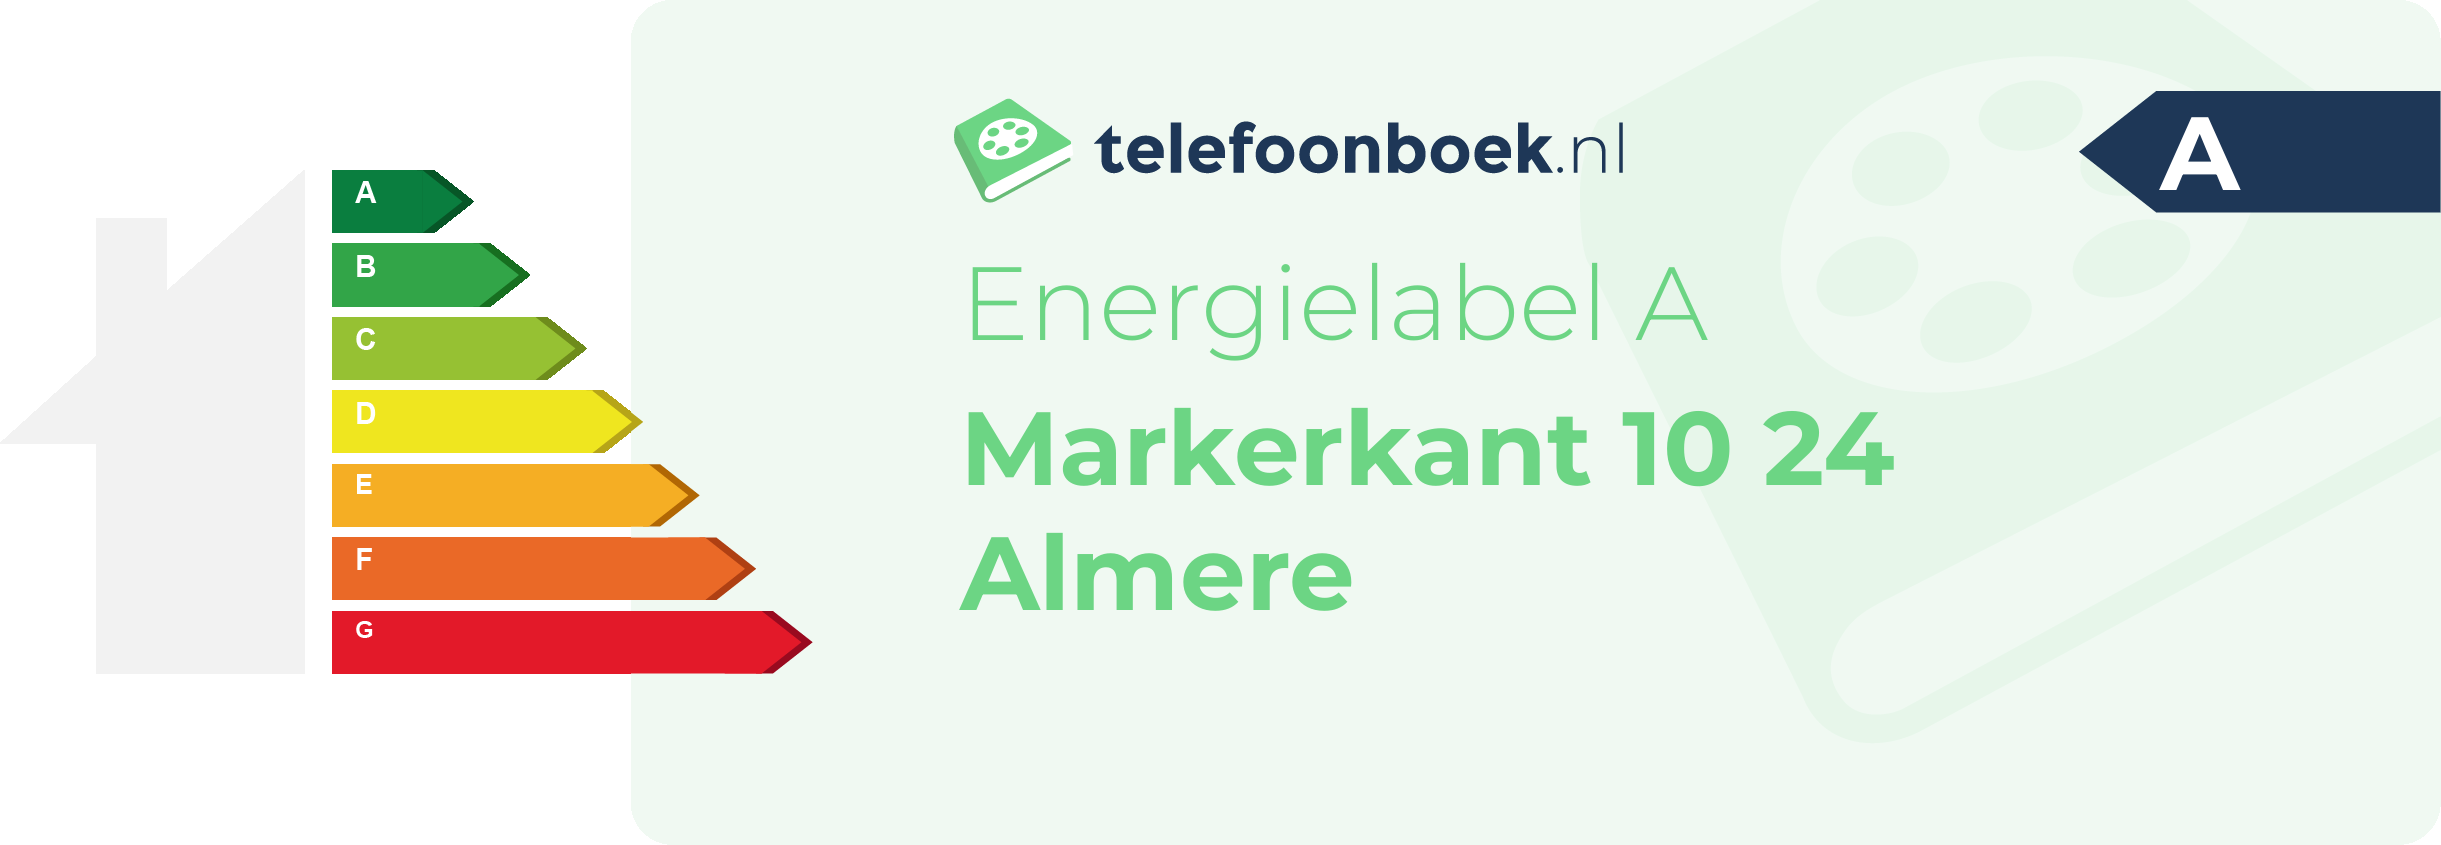 Energielabel Markerkant 10 24 Almere